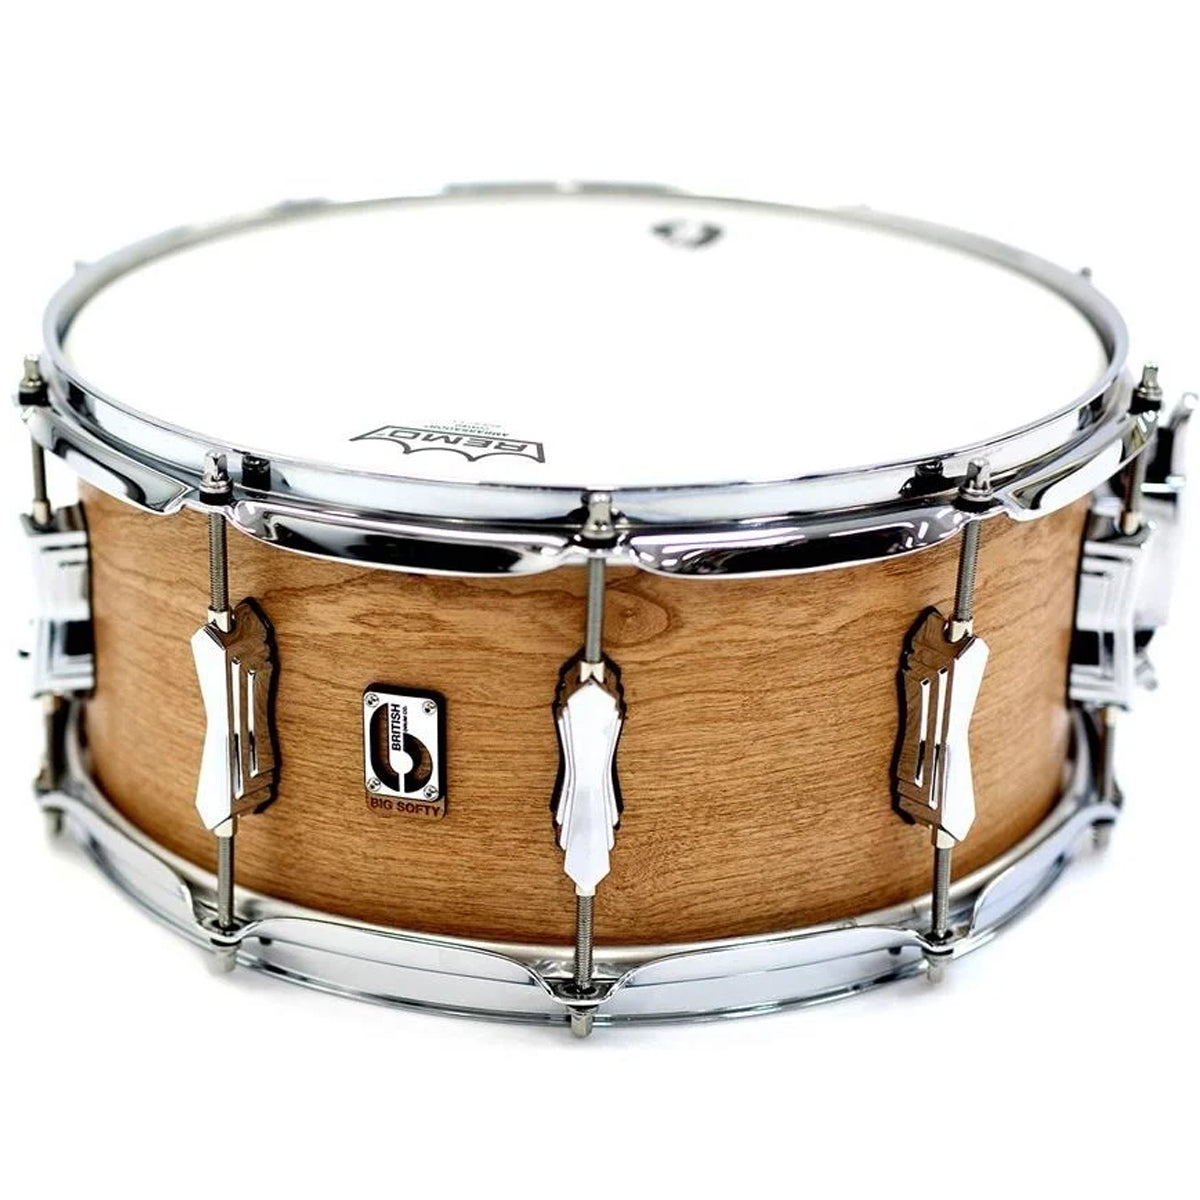 British Drum Company Big Softy Snare Drum